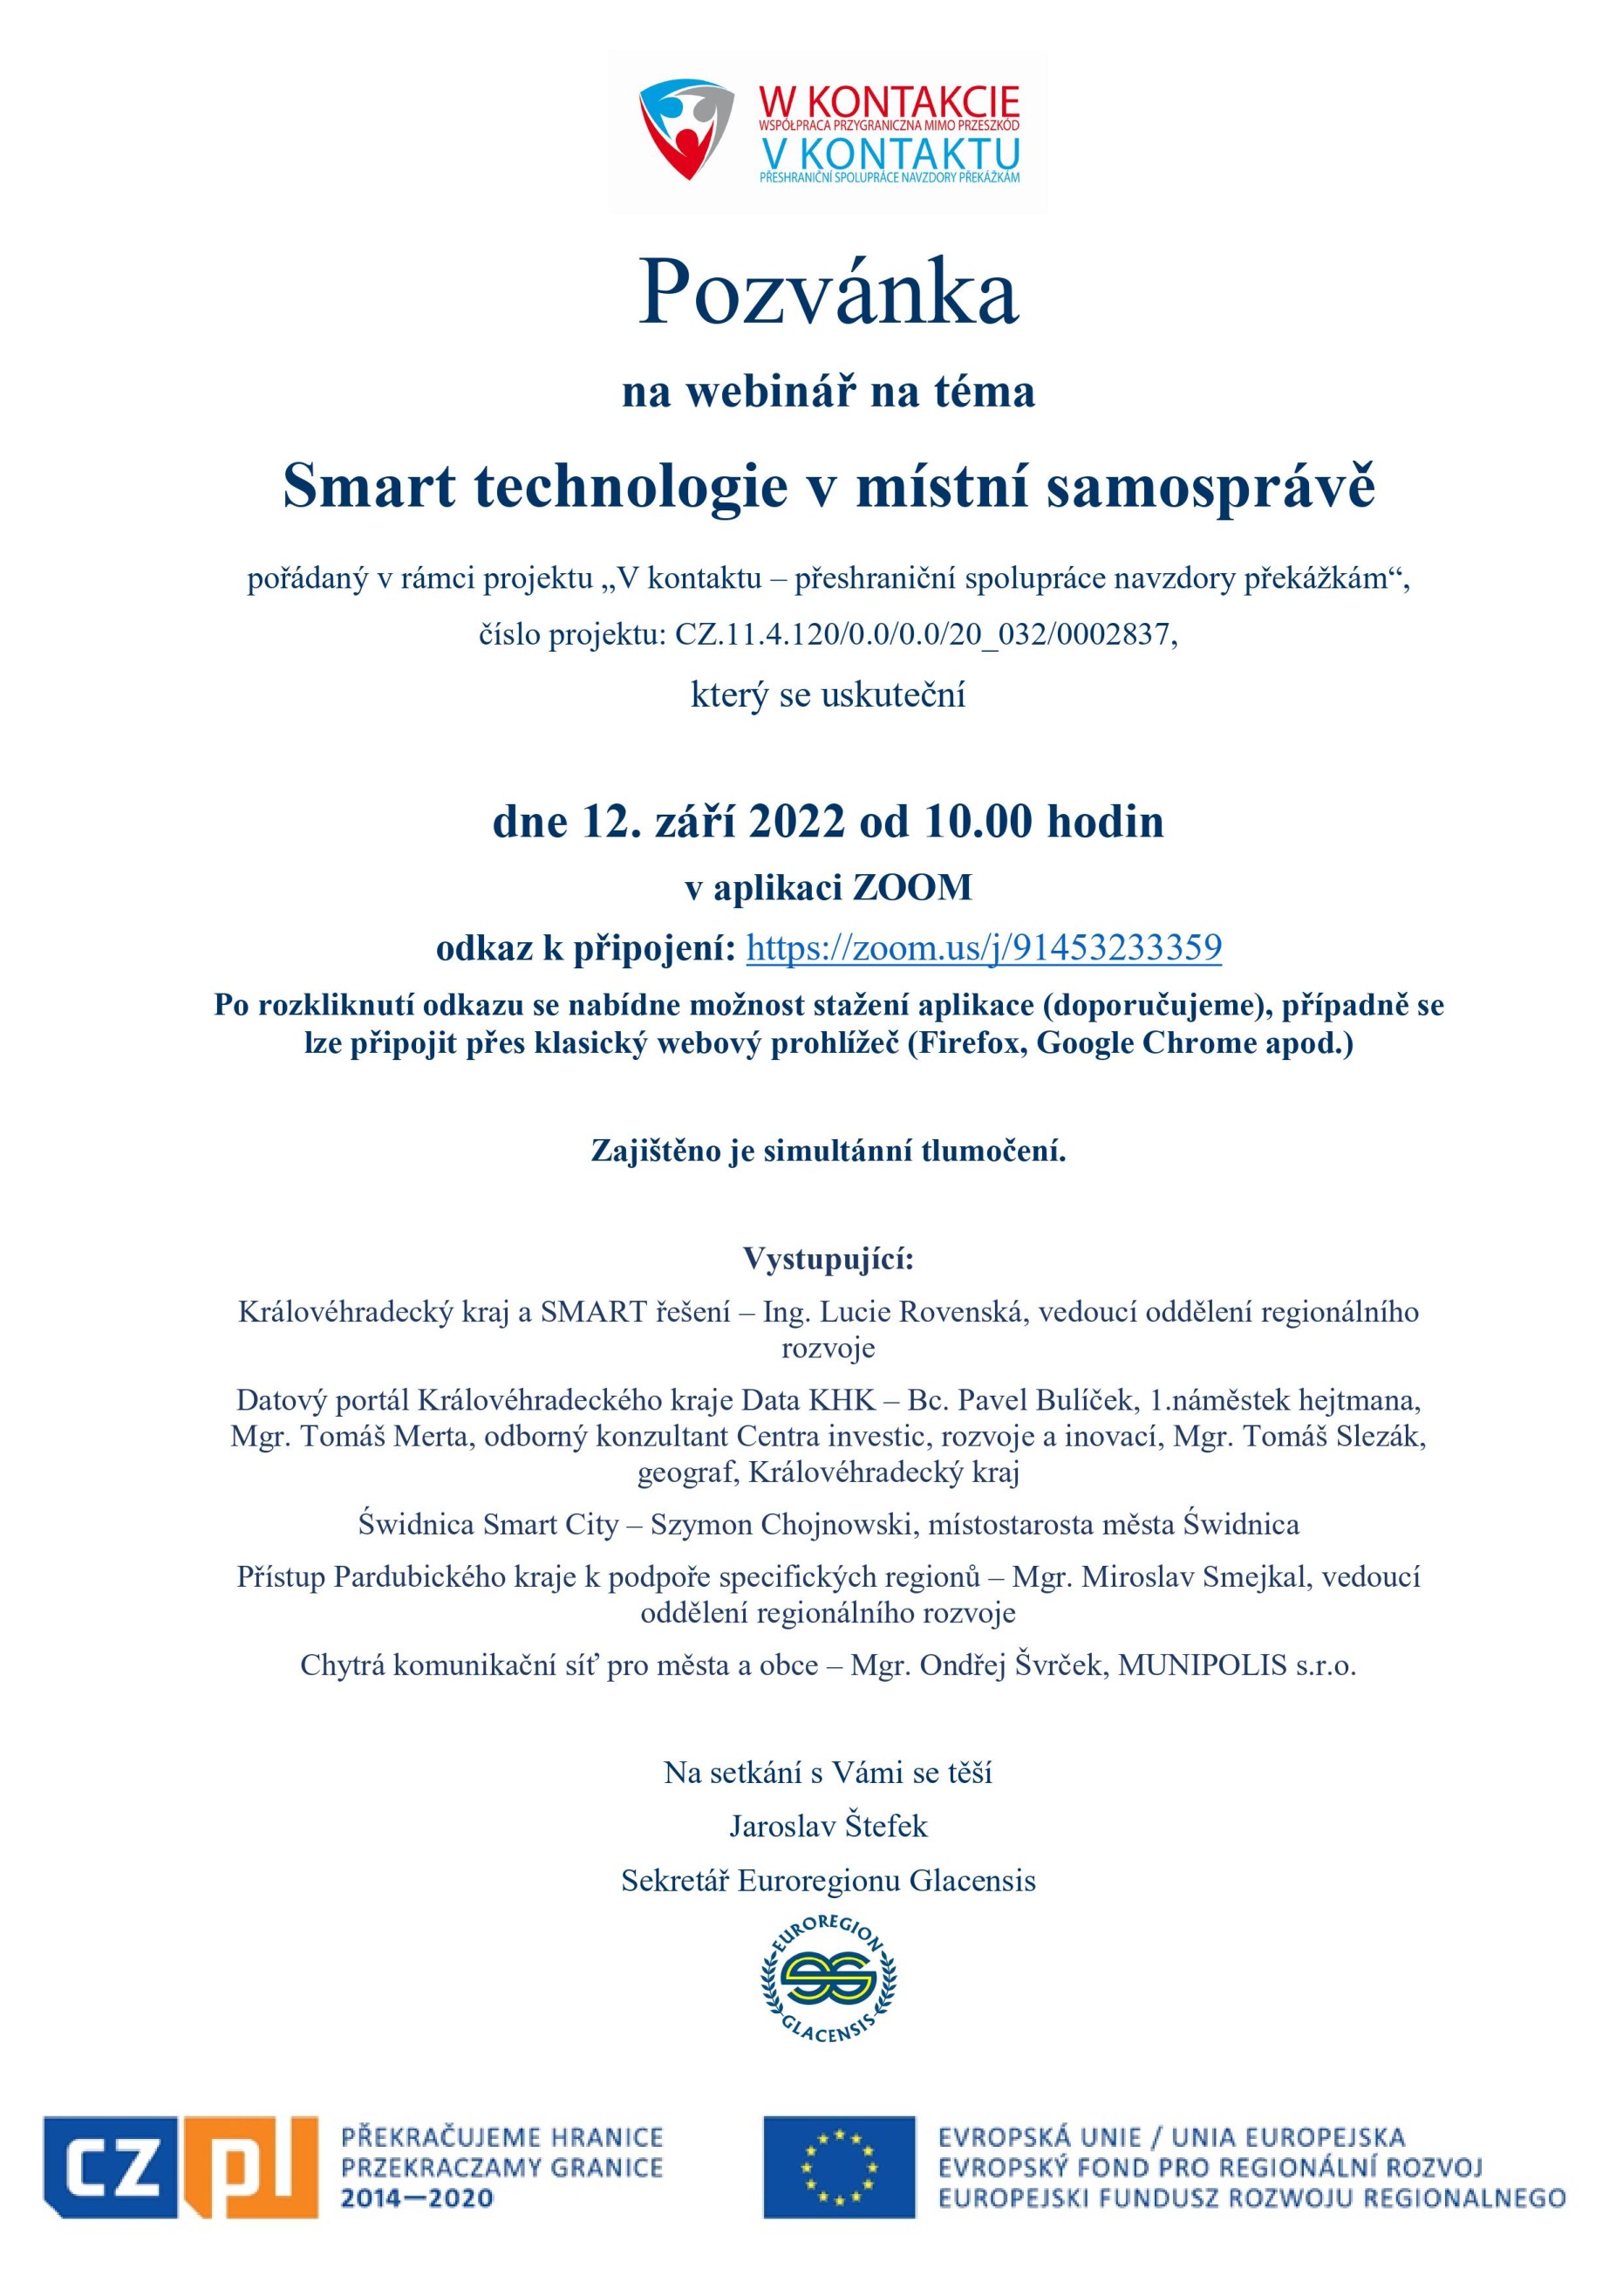 Pozvnka_Smart technologie_12.9.2022_CZ nov